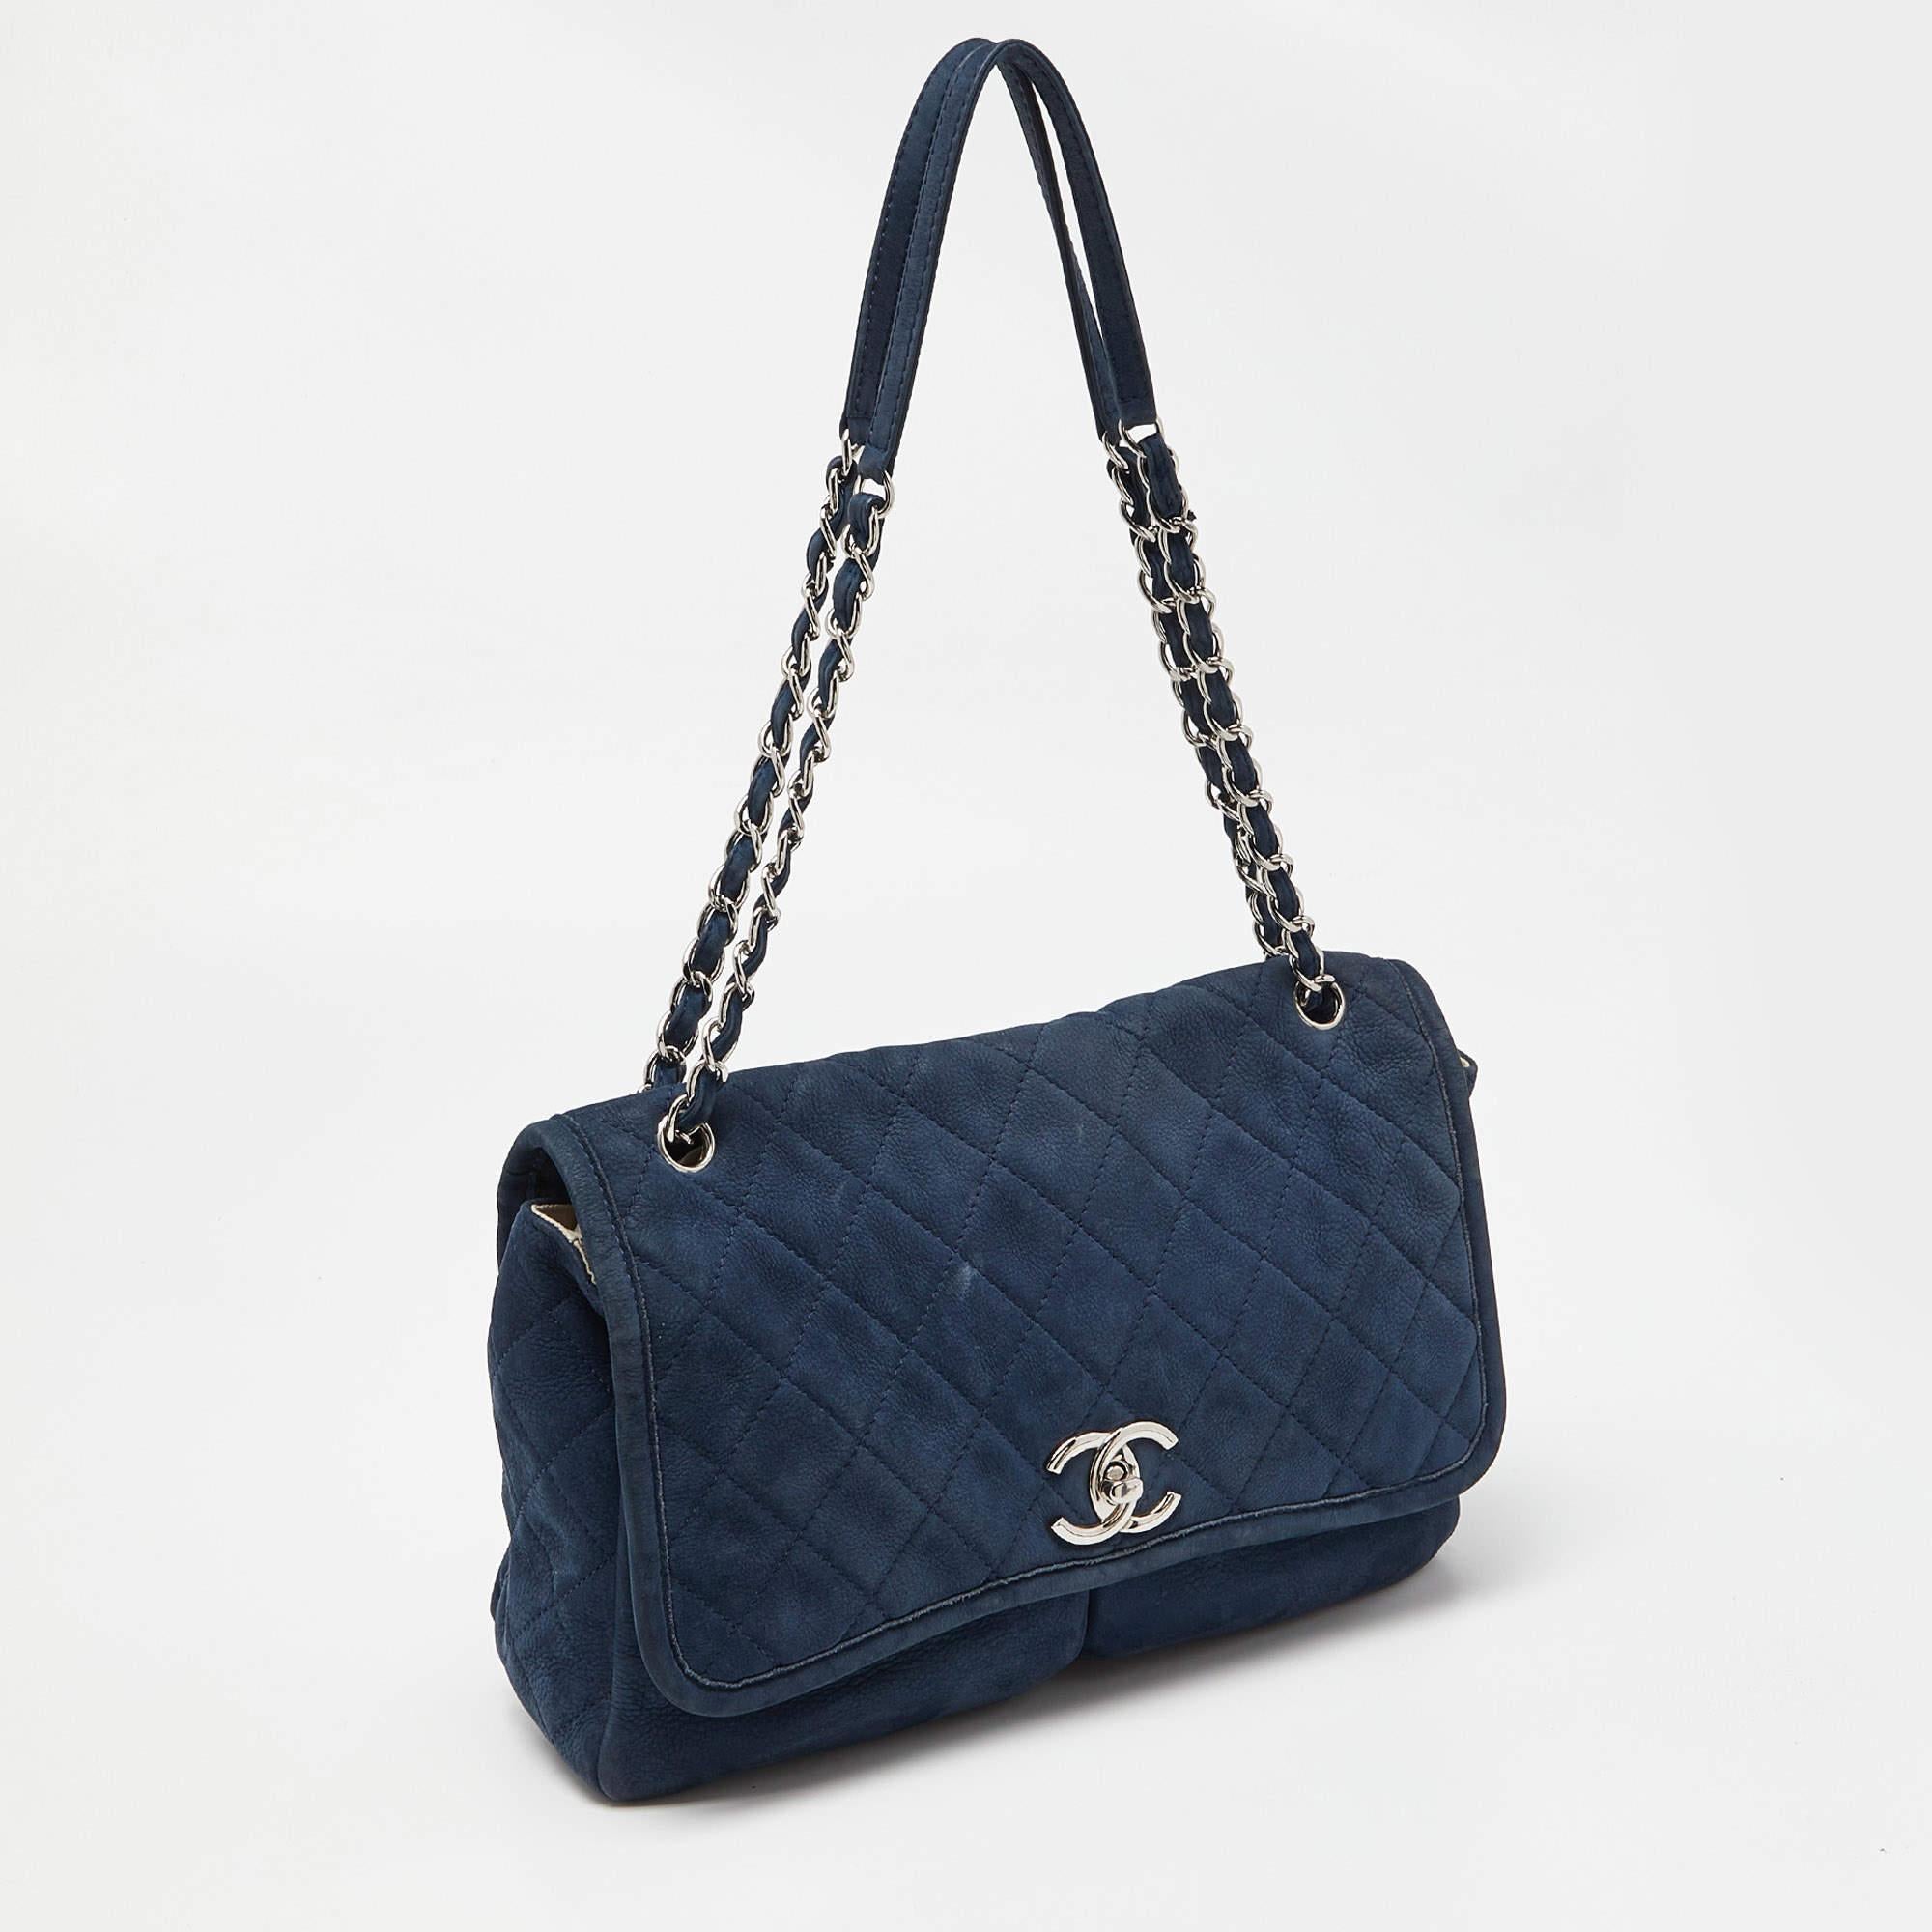 Chanel Blue Quilted Nubuck Leather Large Split Pocket Flap Bag In Good Condition For Sale In Dubai, Al Qouz 2